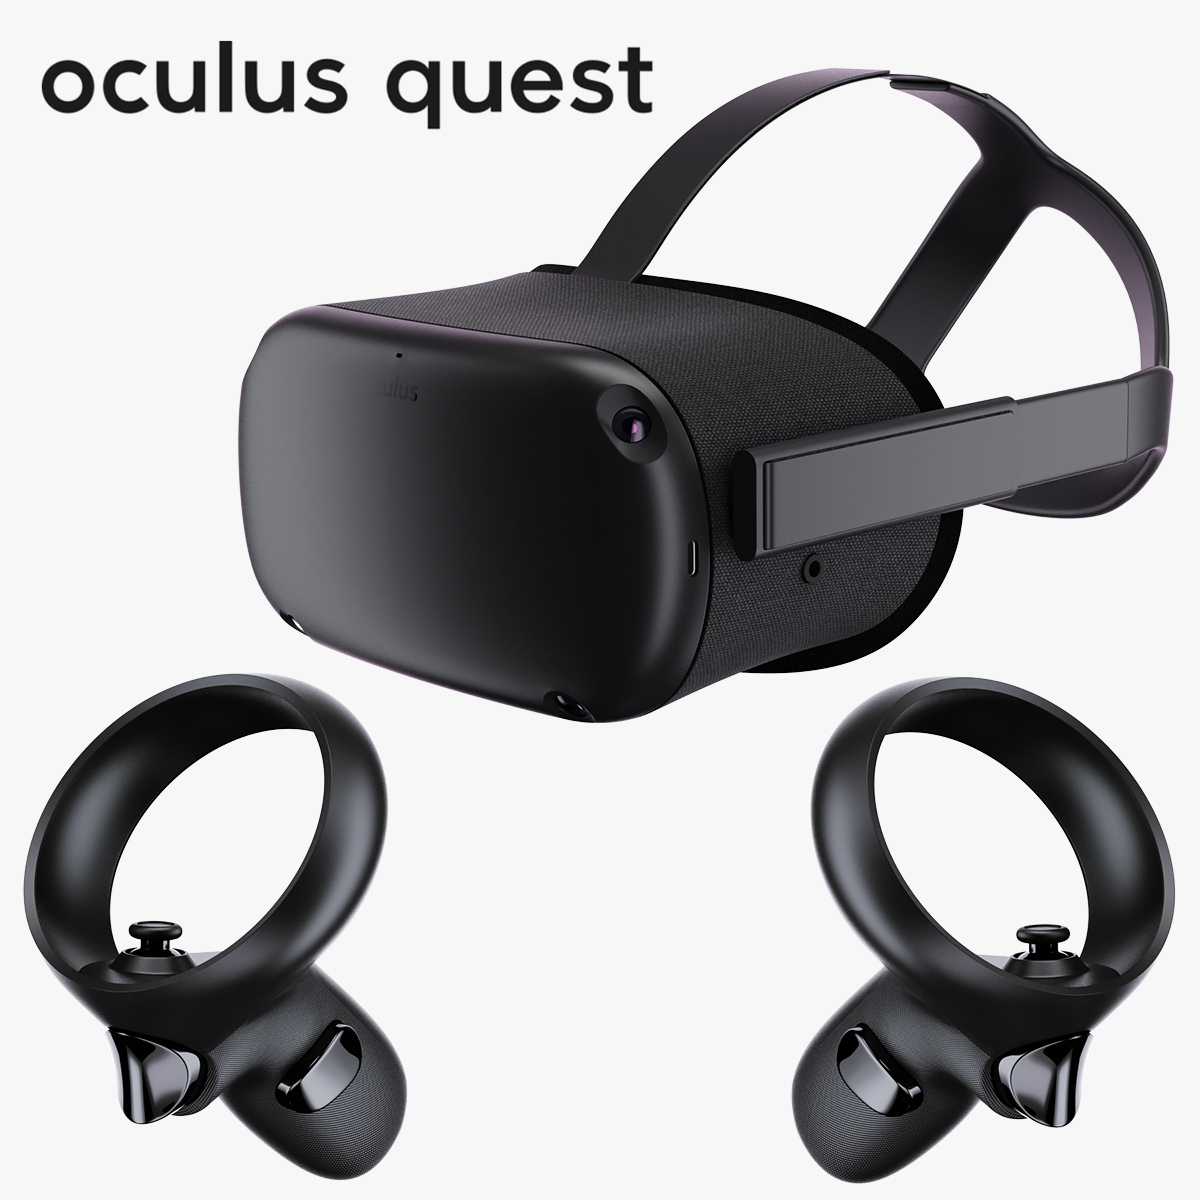 Image result for oculus quest